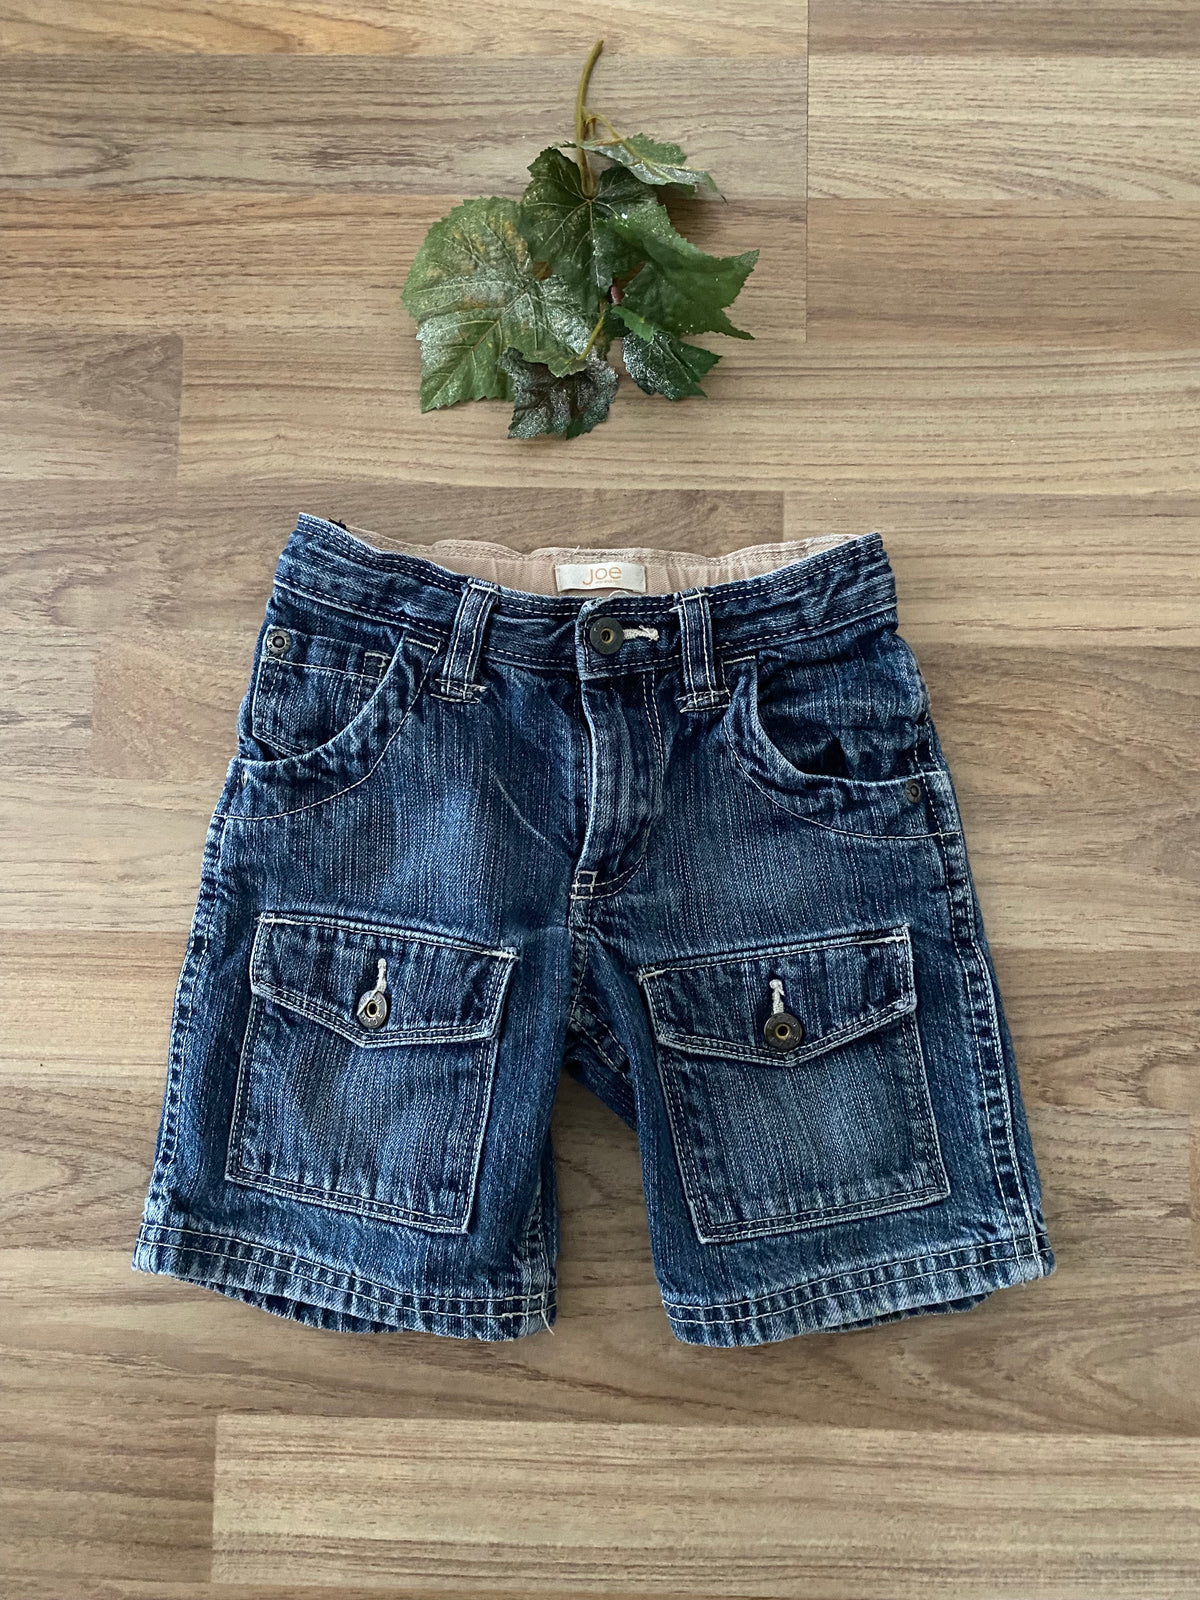 Shorts (Boys Size 3)